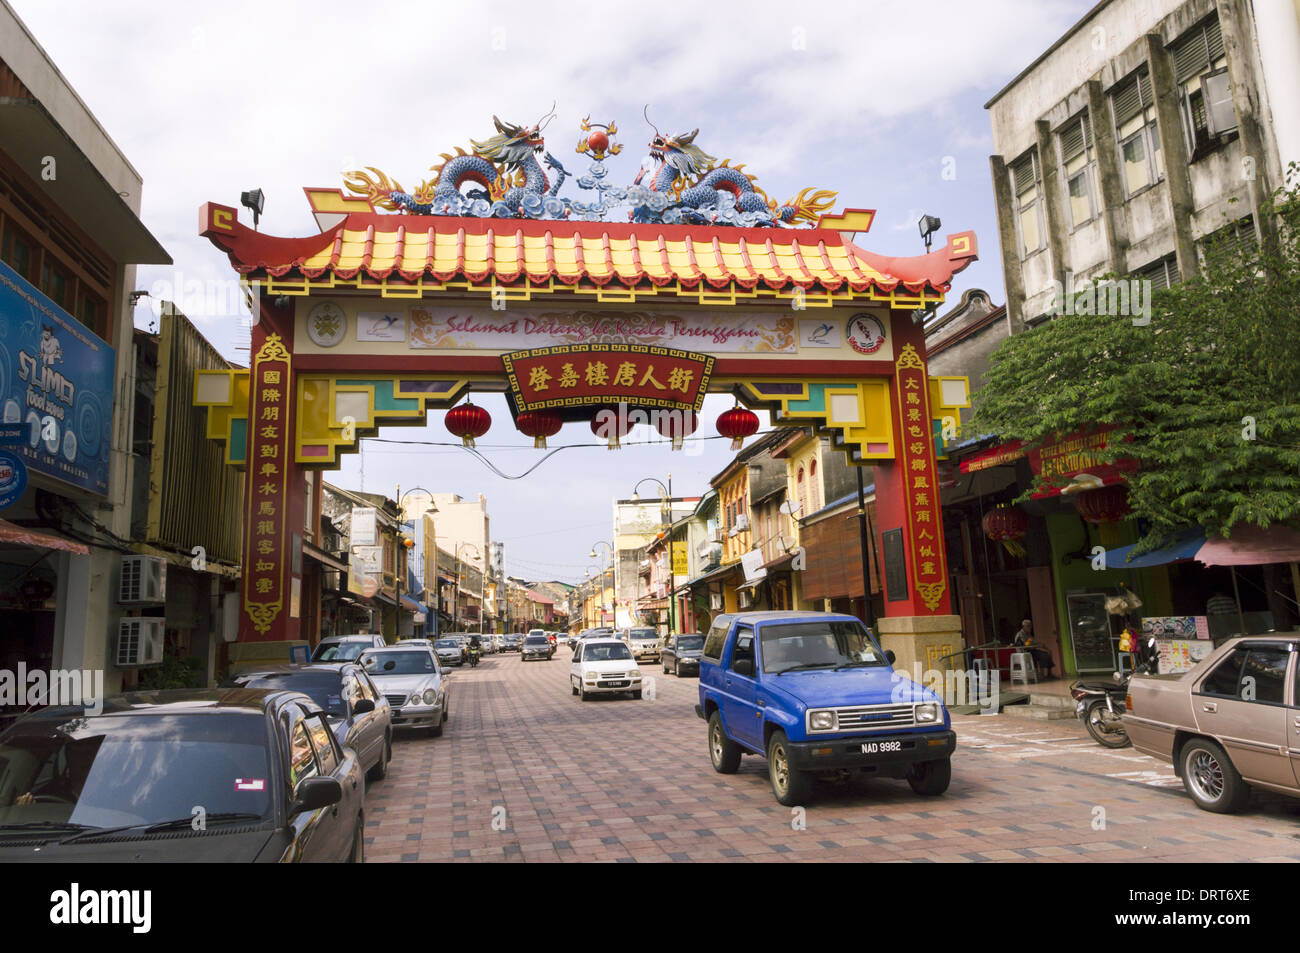 terengganu chinatown, malaysia Stock Photo